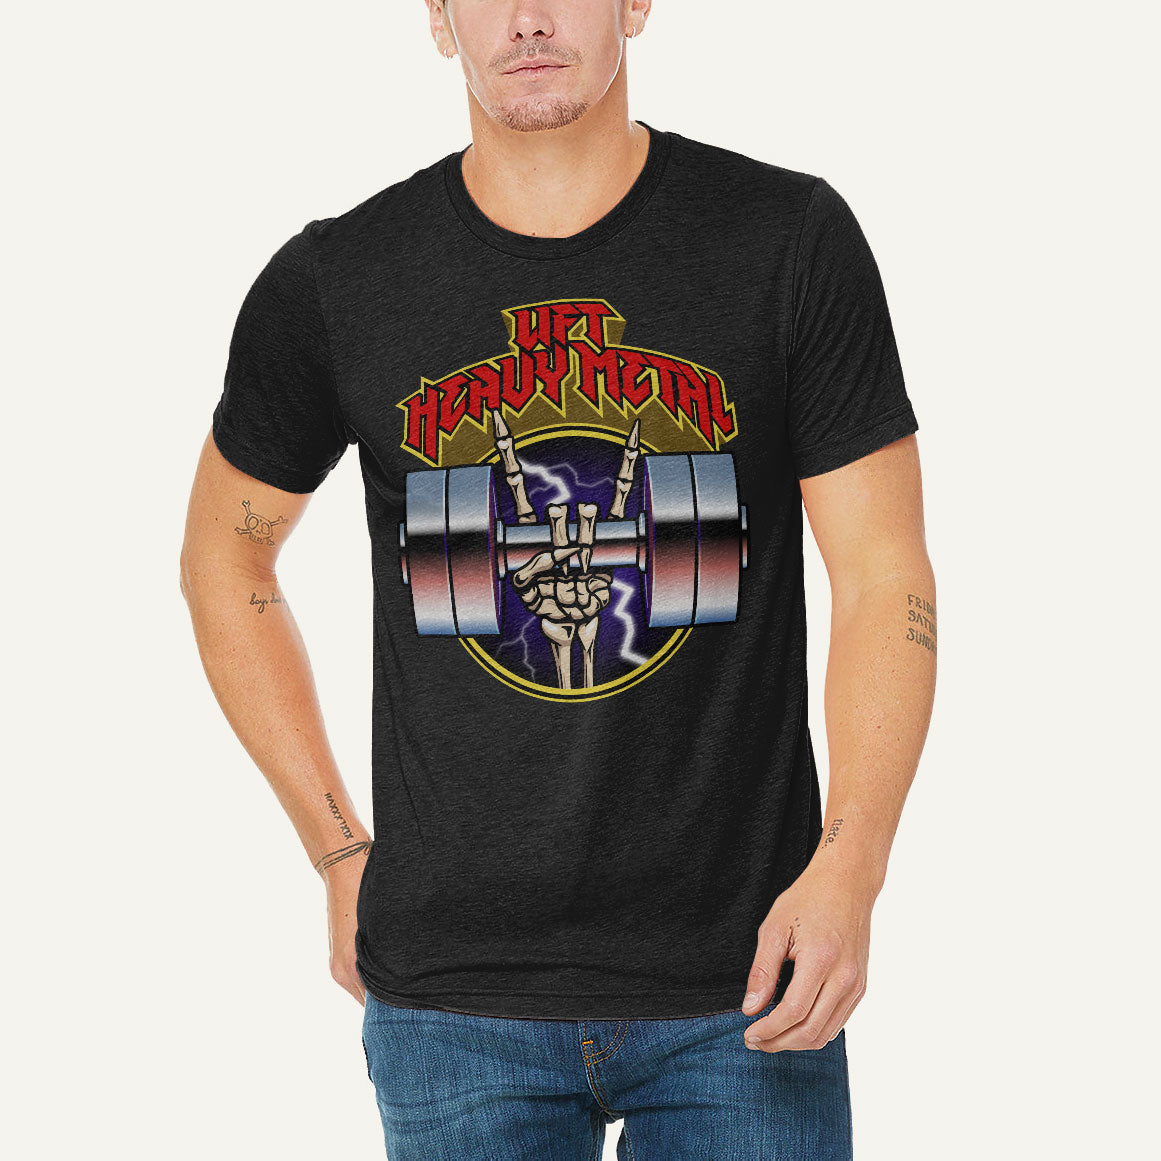 Lift Heavy Metal Men's Triblend T-Shirt